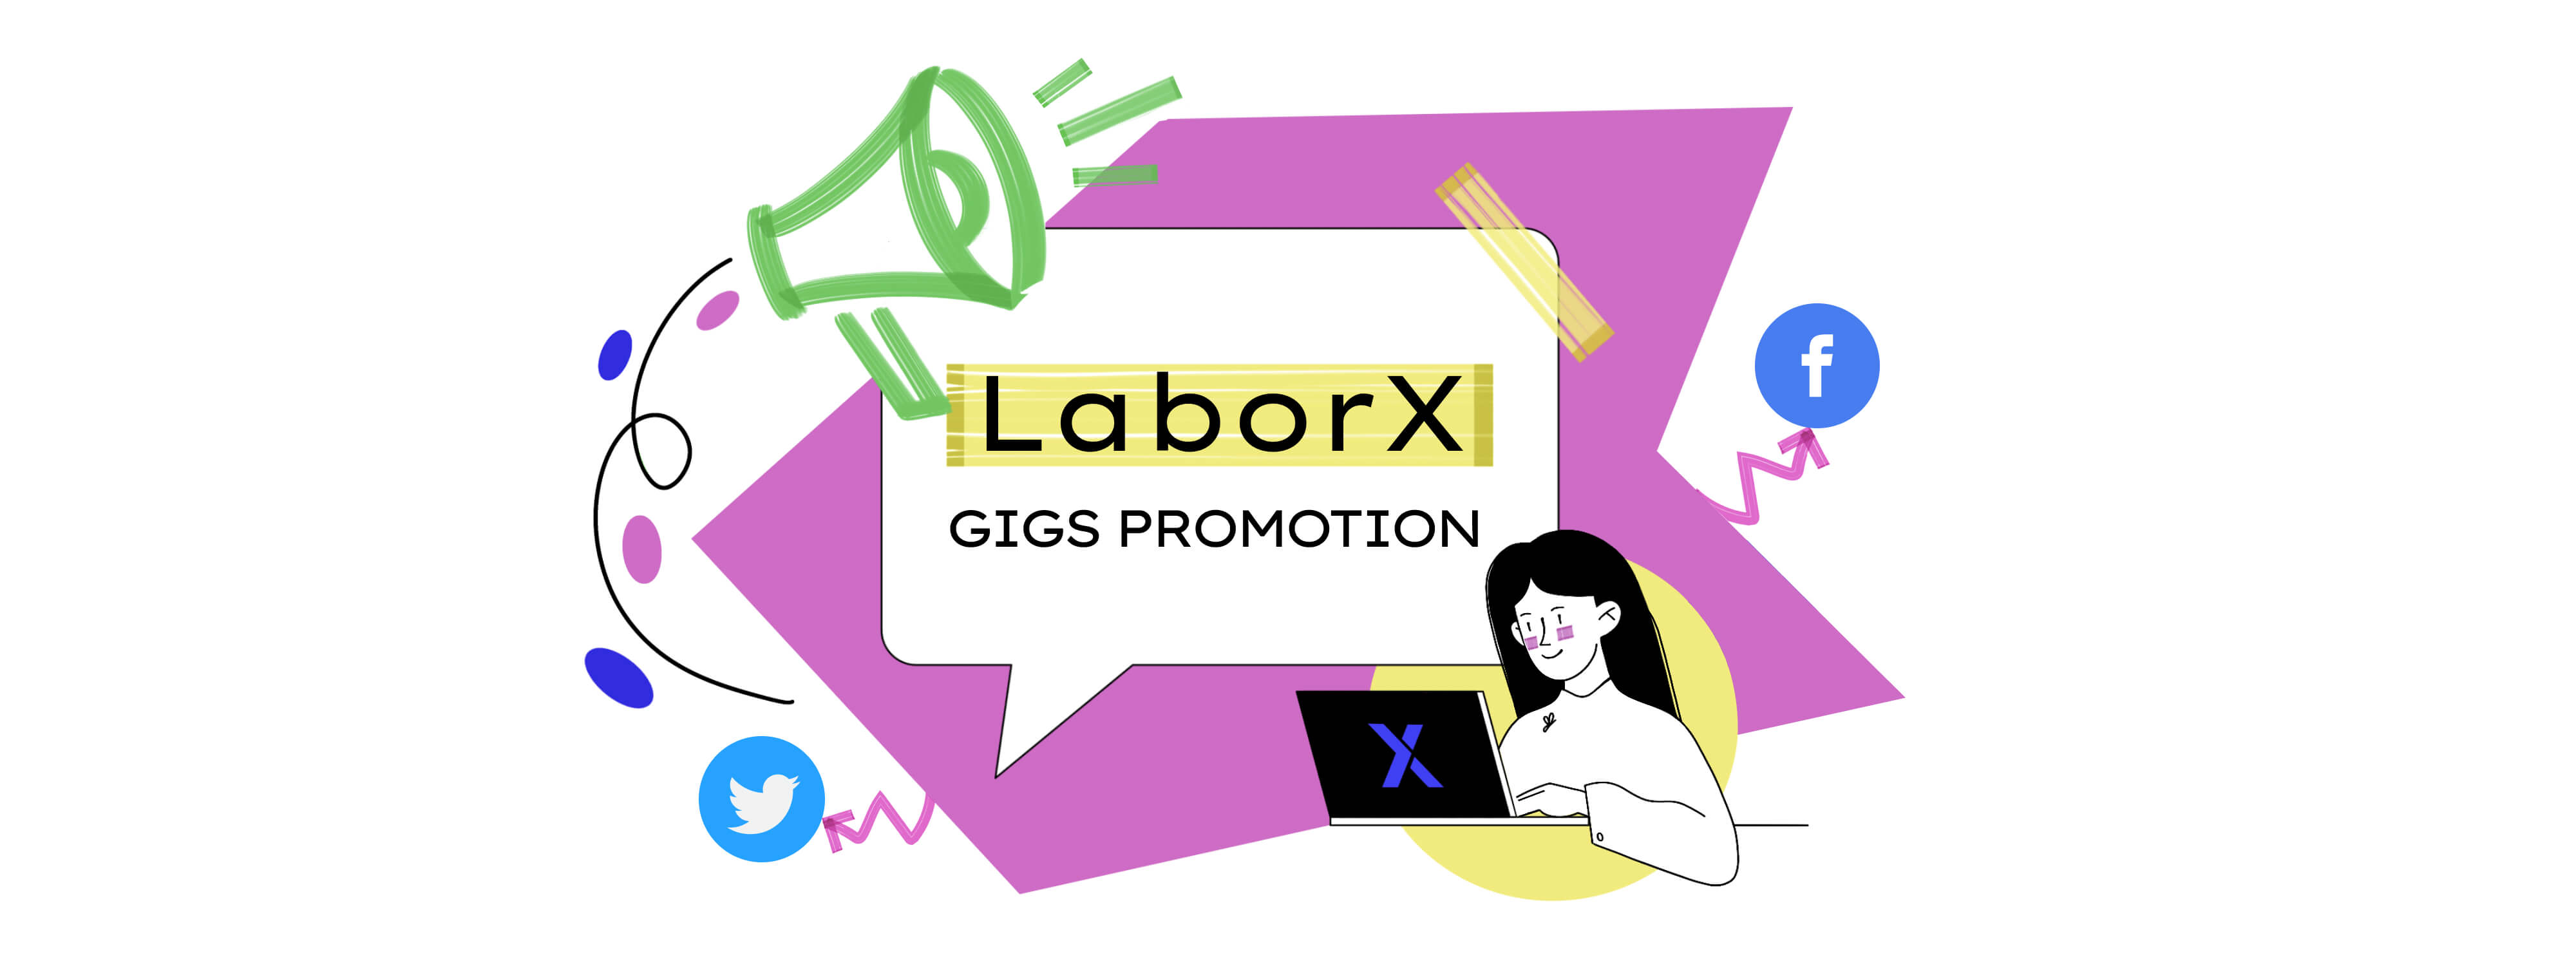 Win Premium Account Status With LaborX Gigs!